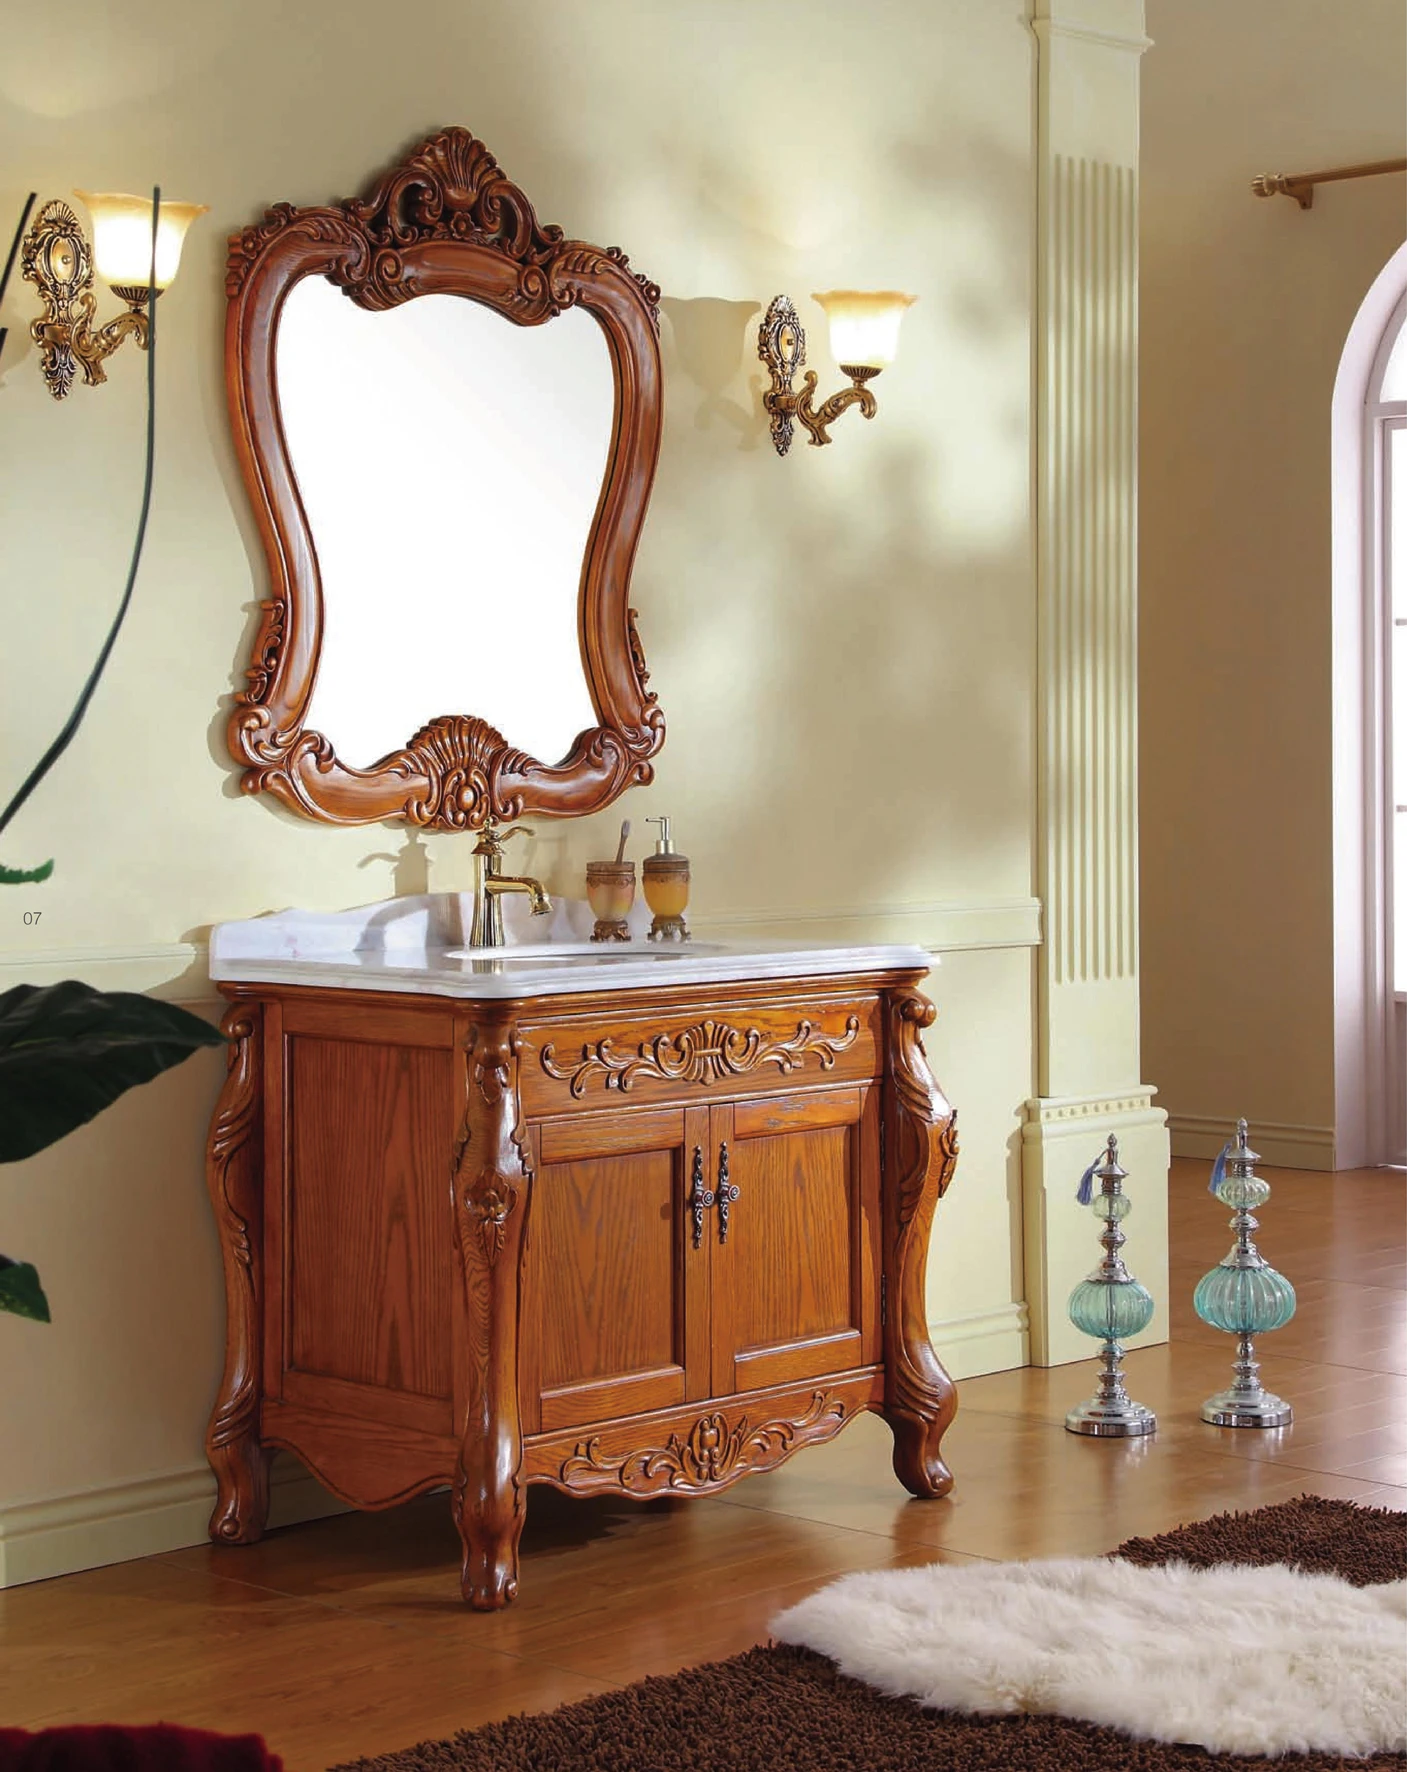 Foshan Space Under Sink Wooden Bathroom Vanity Cabinet with Mirror